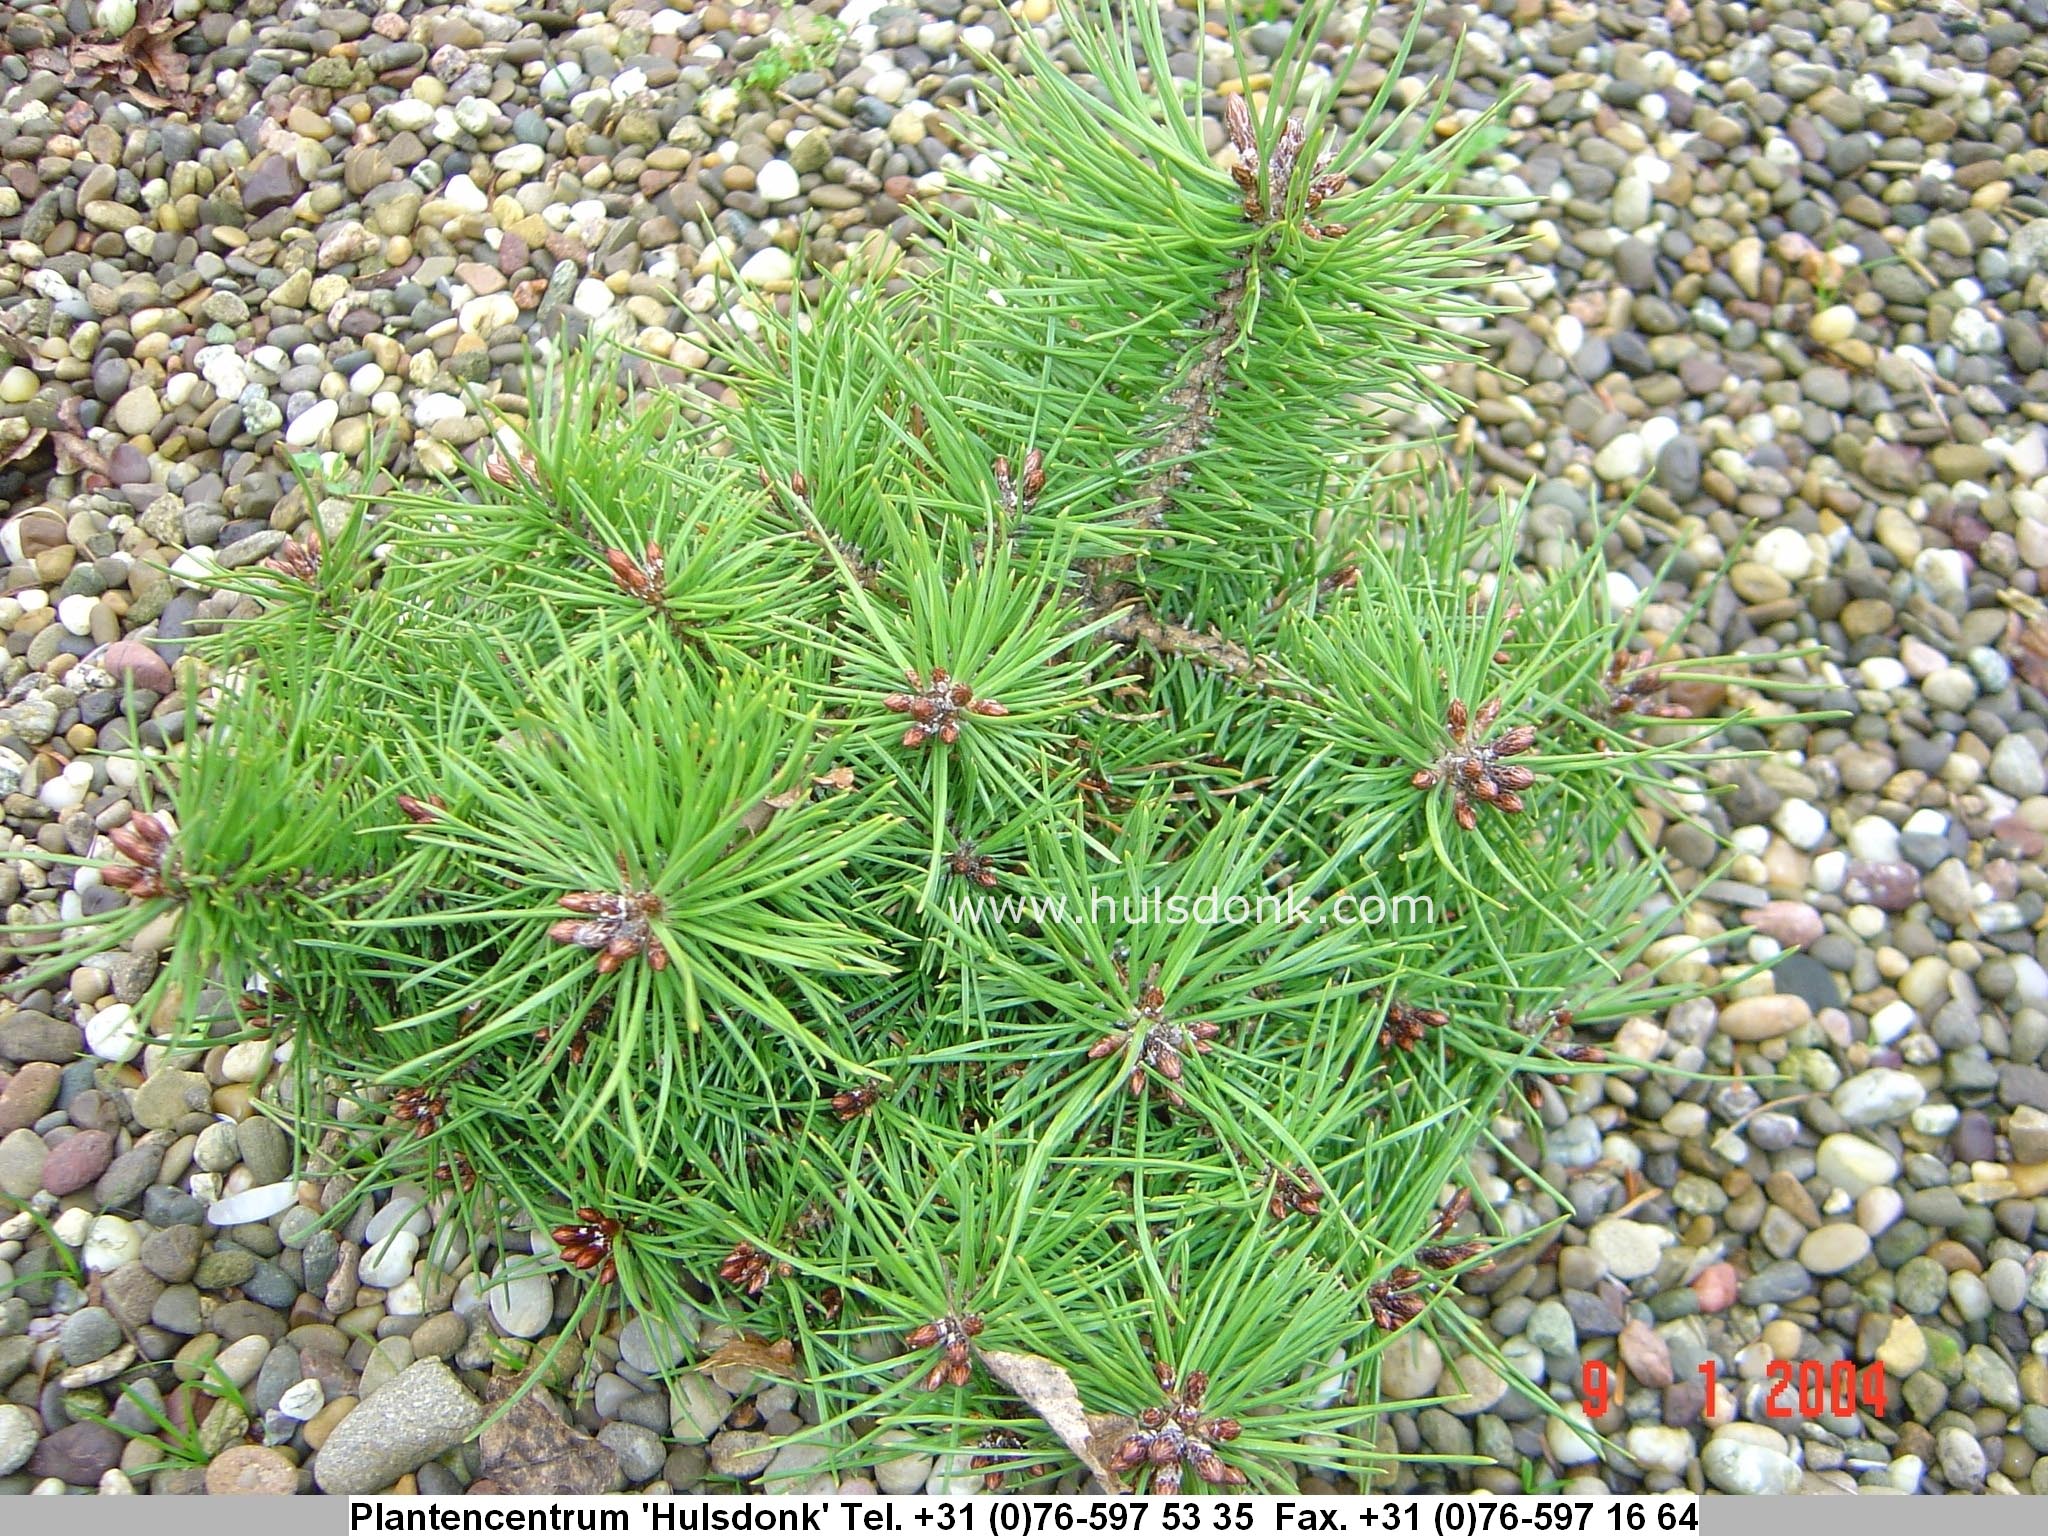 Pinus sylvestris 'Sandringham'